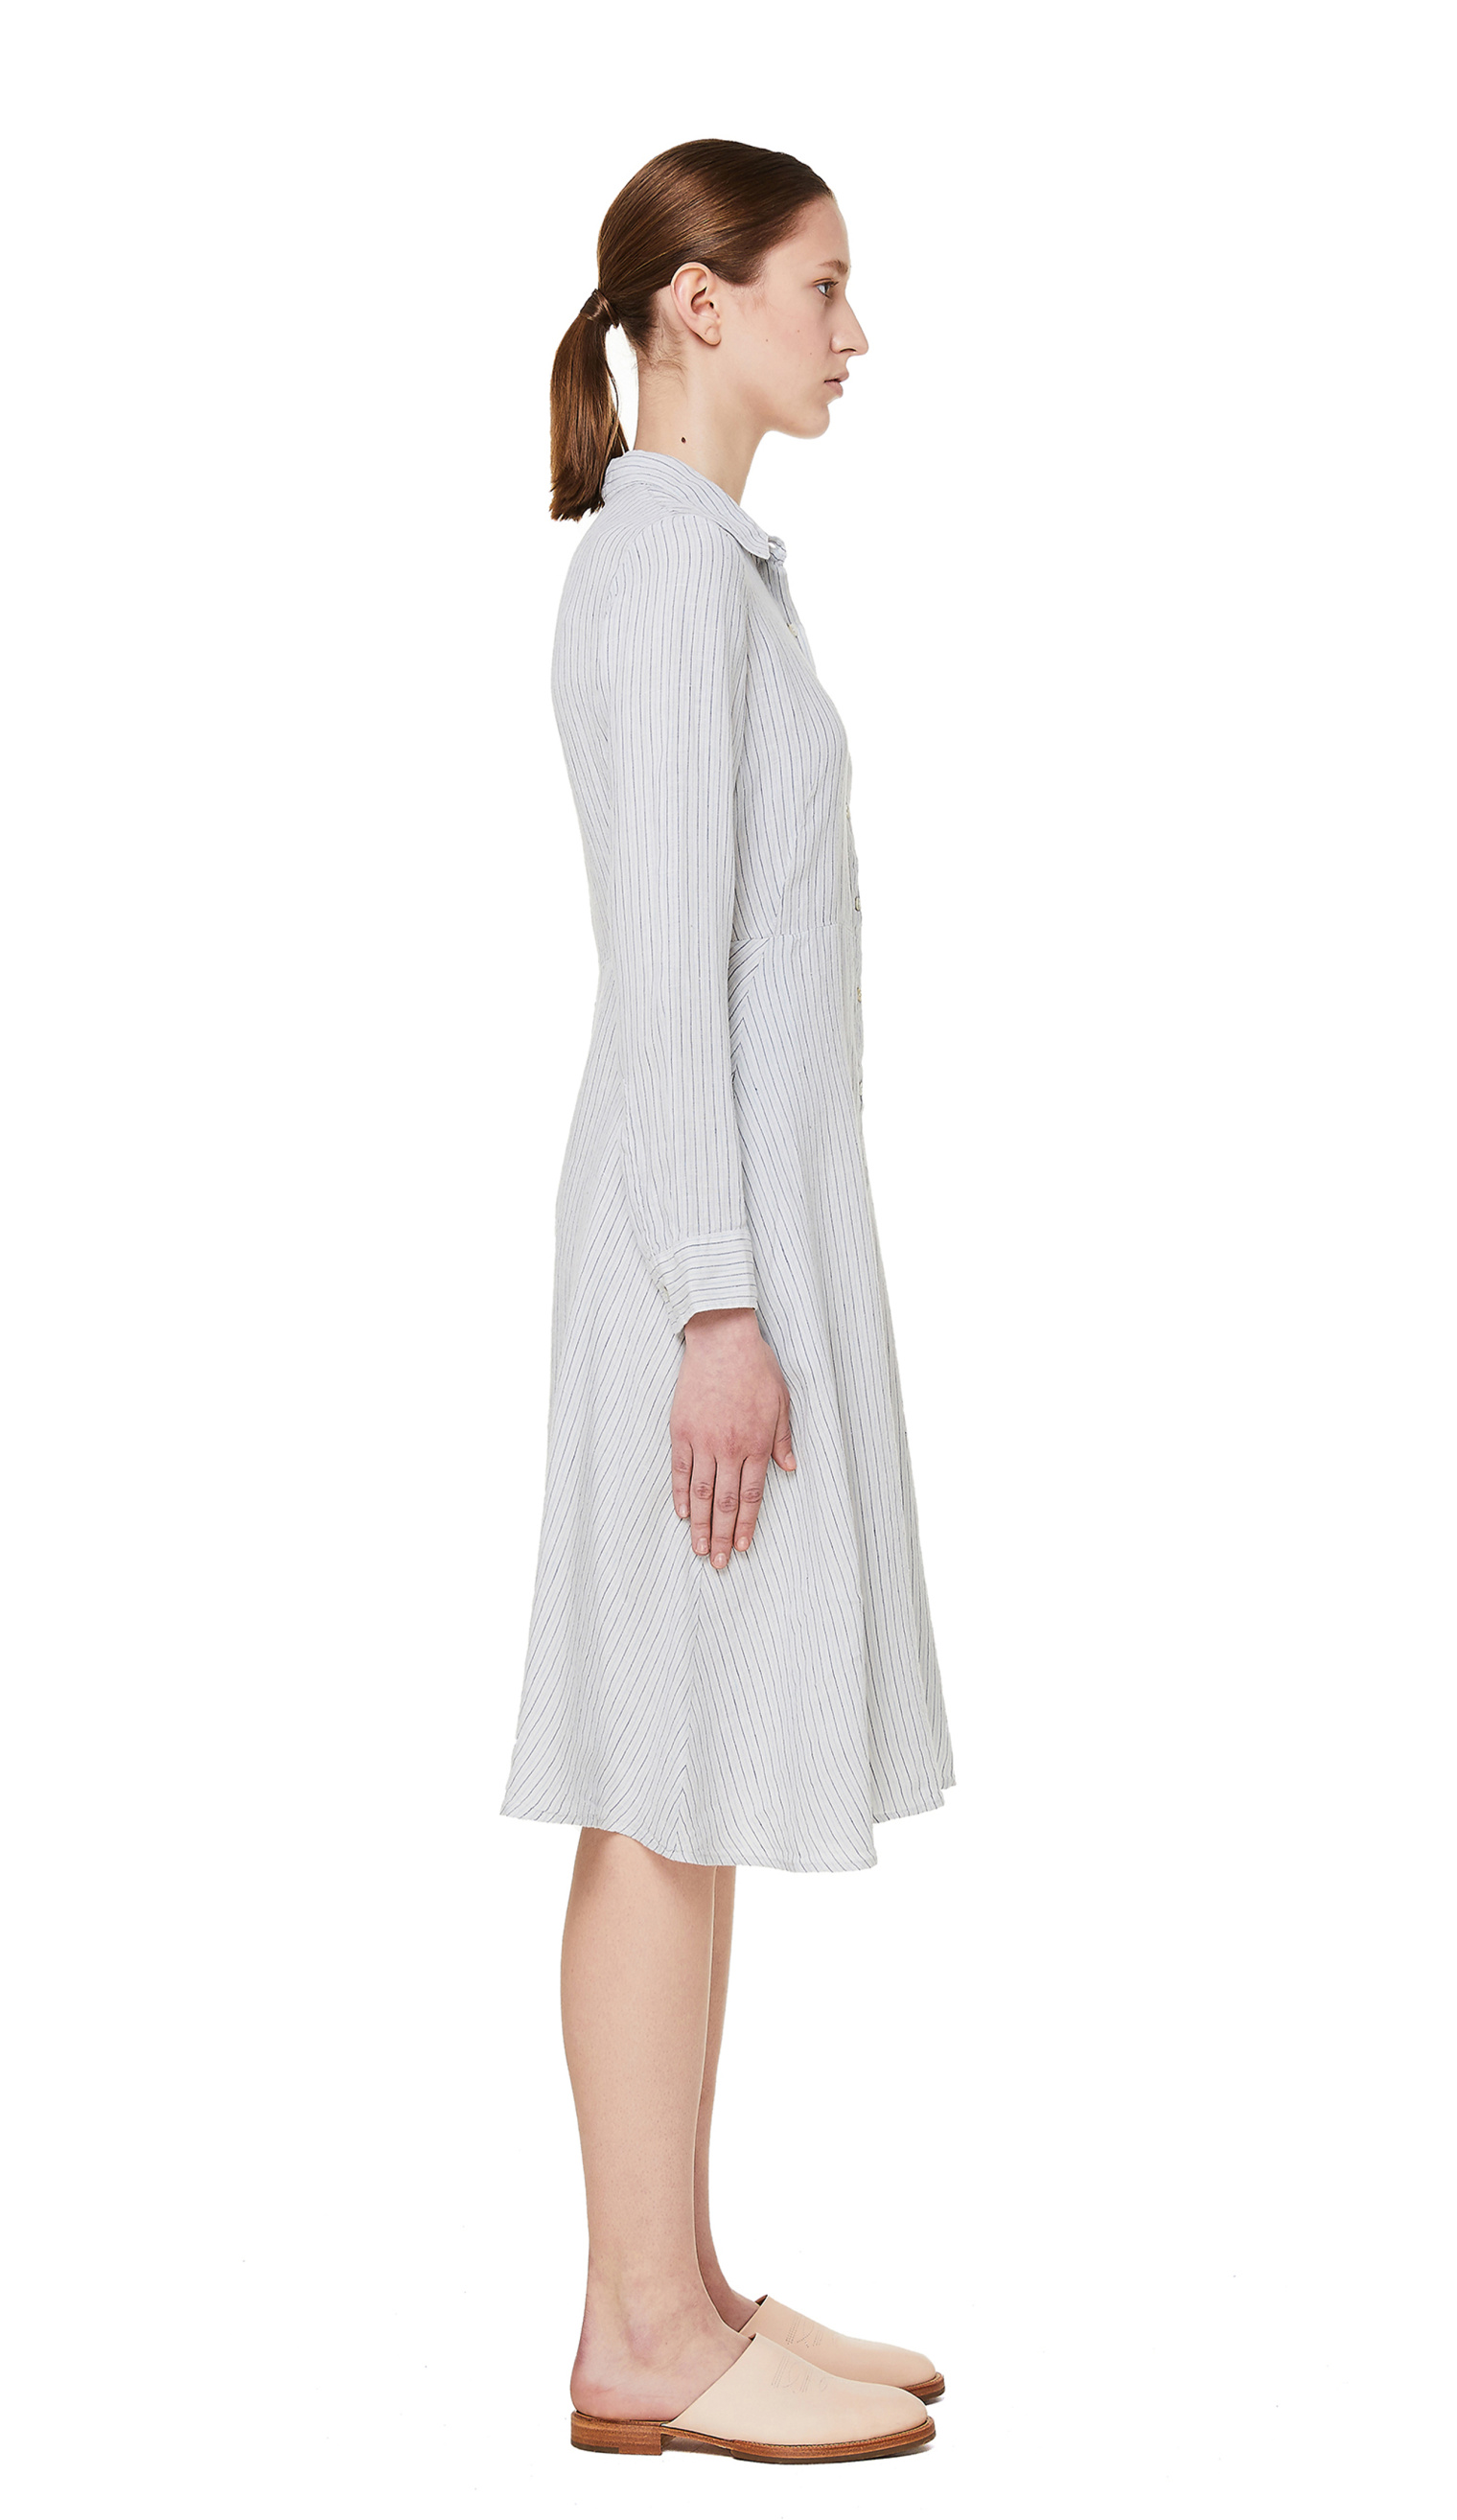 120% Lino Grey Striped Linen Dress